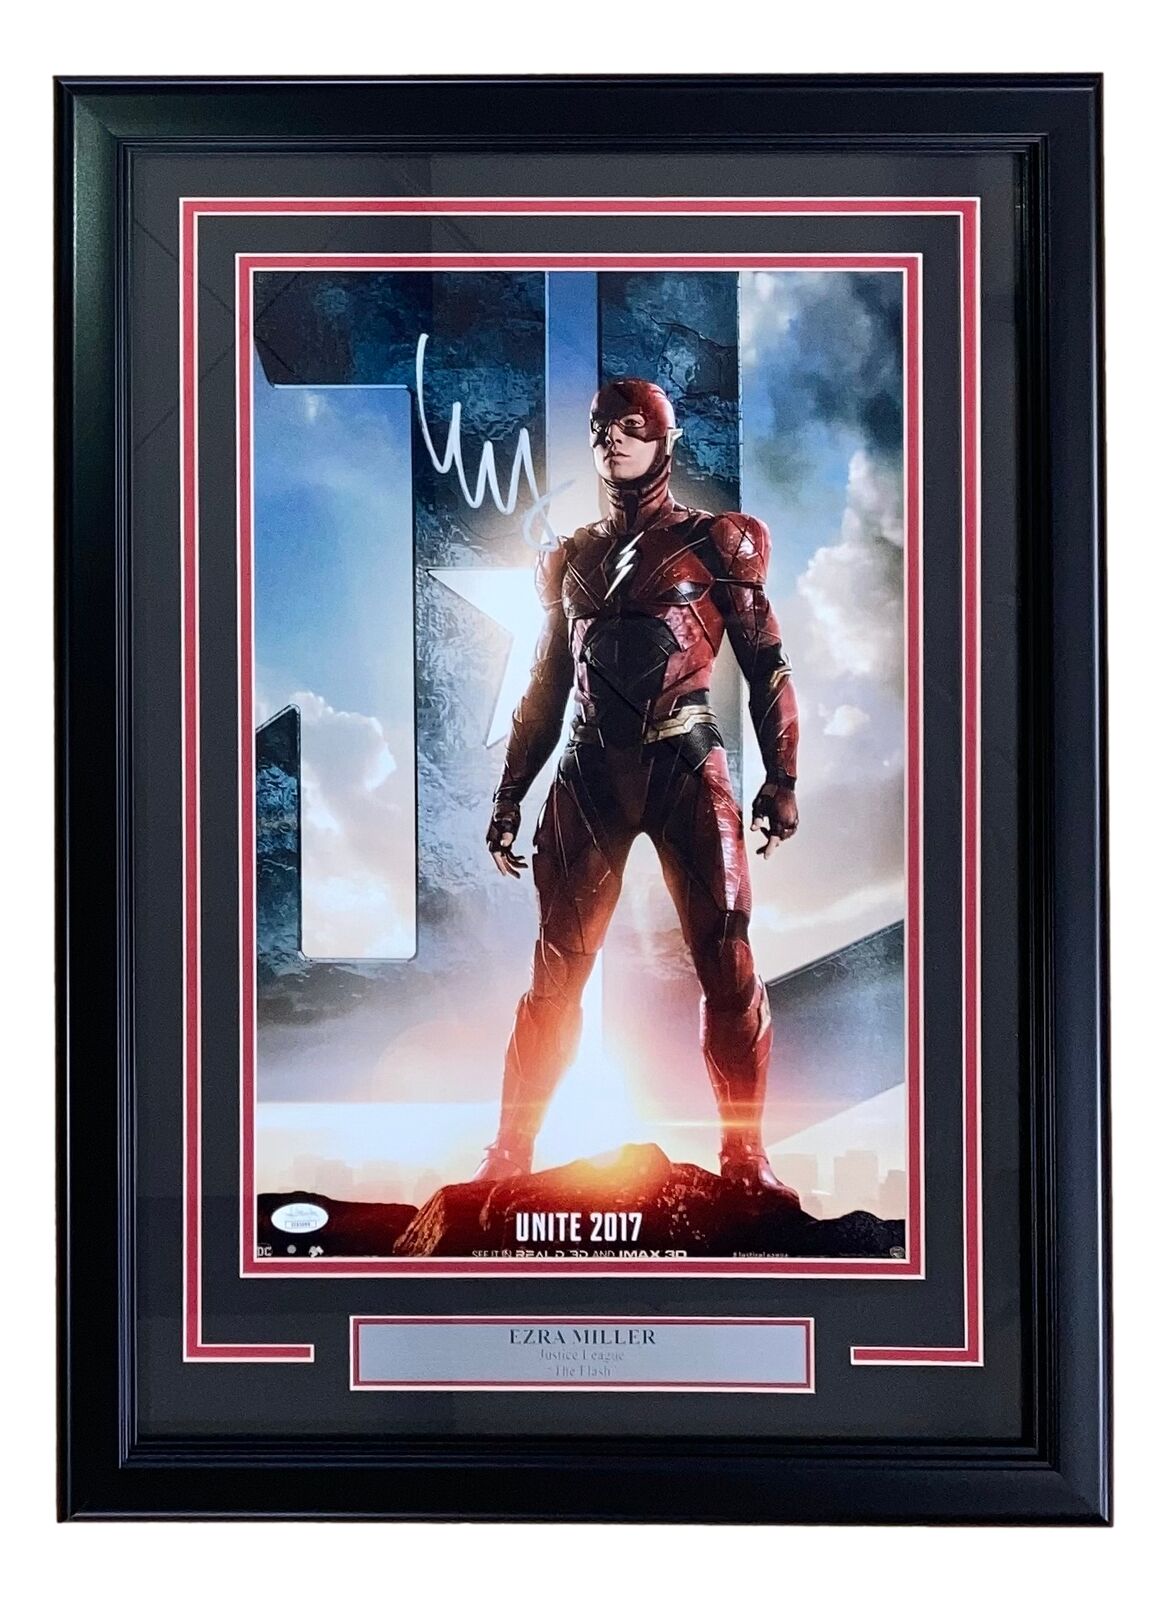 Ezra Miller Signed Framed 11x17 Justice League Movie Poster Photo JSA